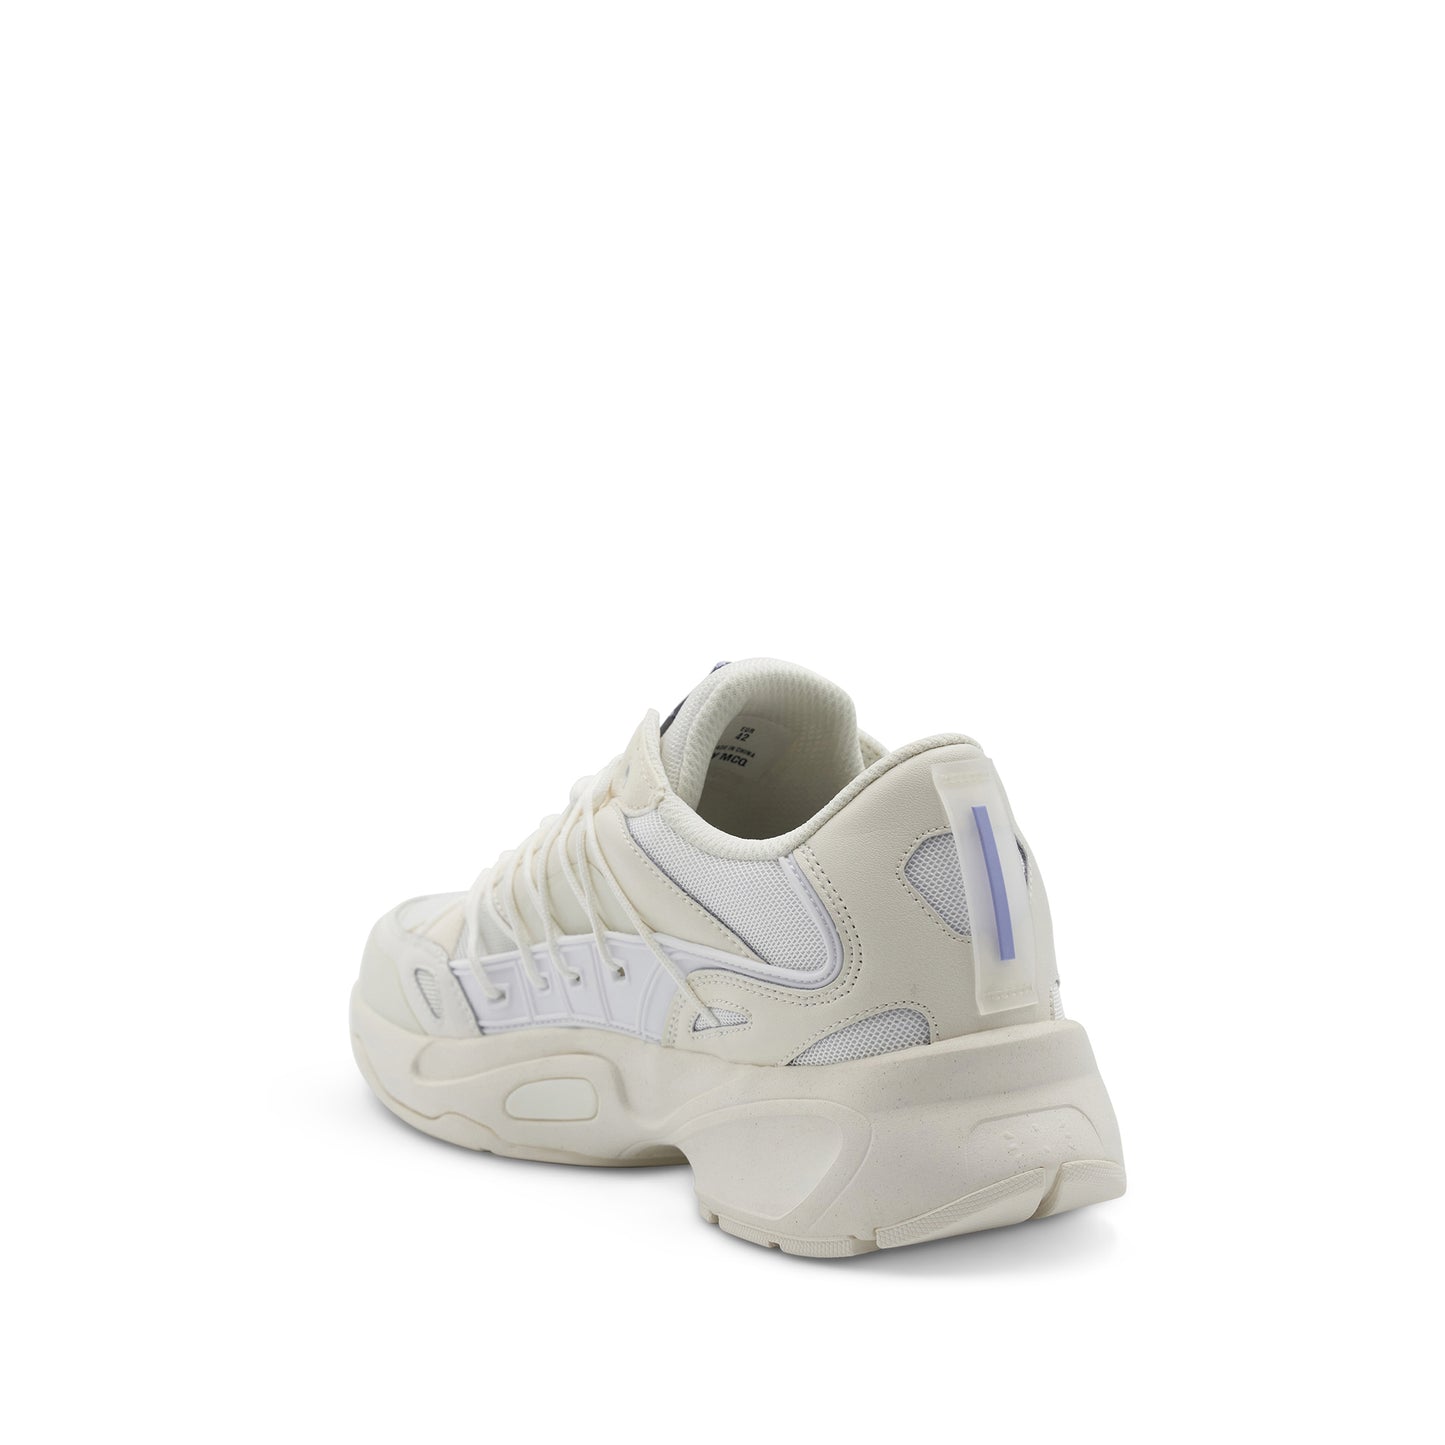 Icon Br7 Aratana Sneaker in White